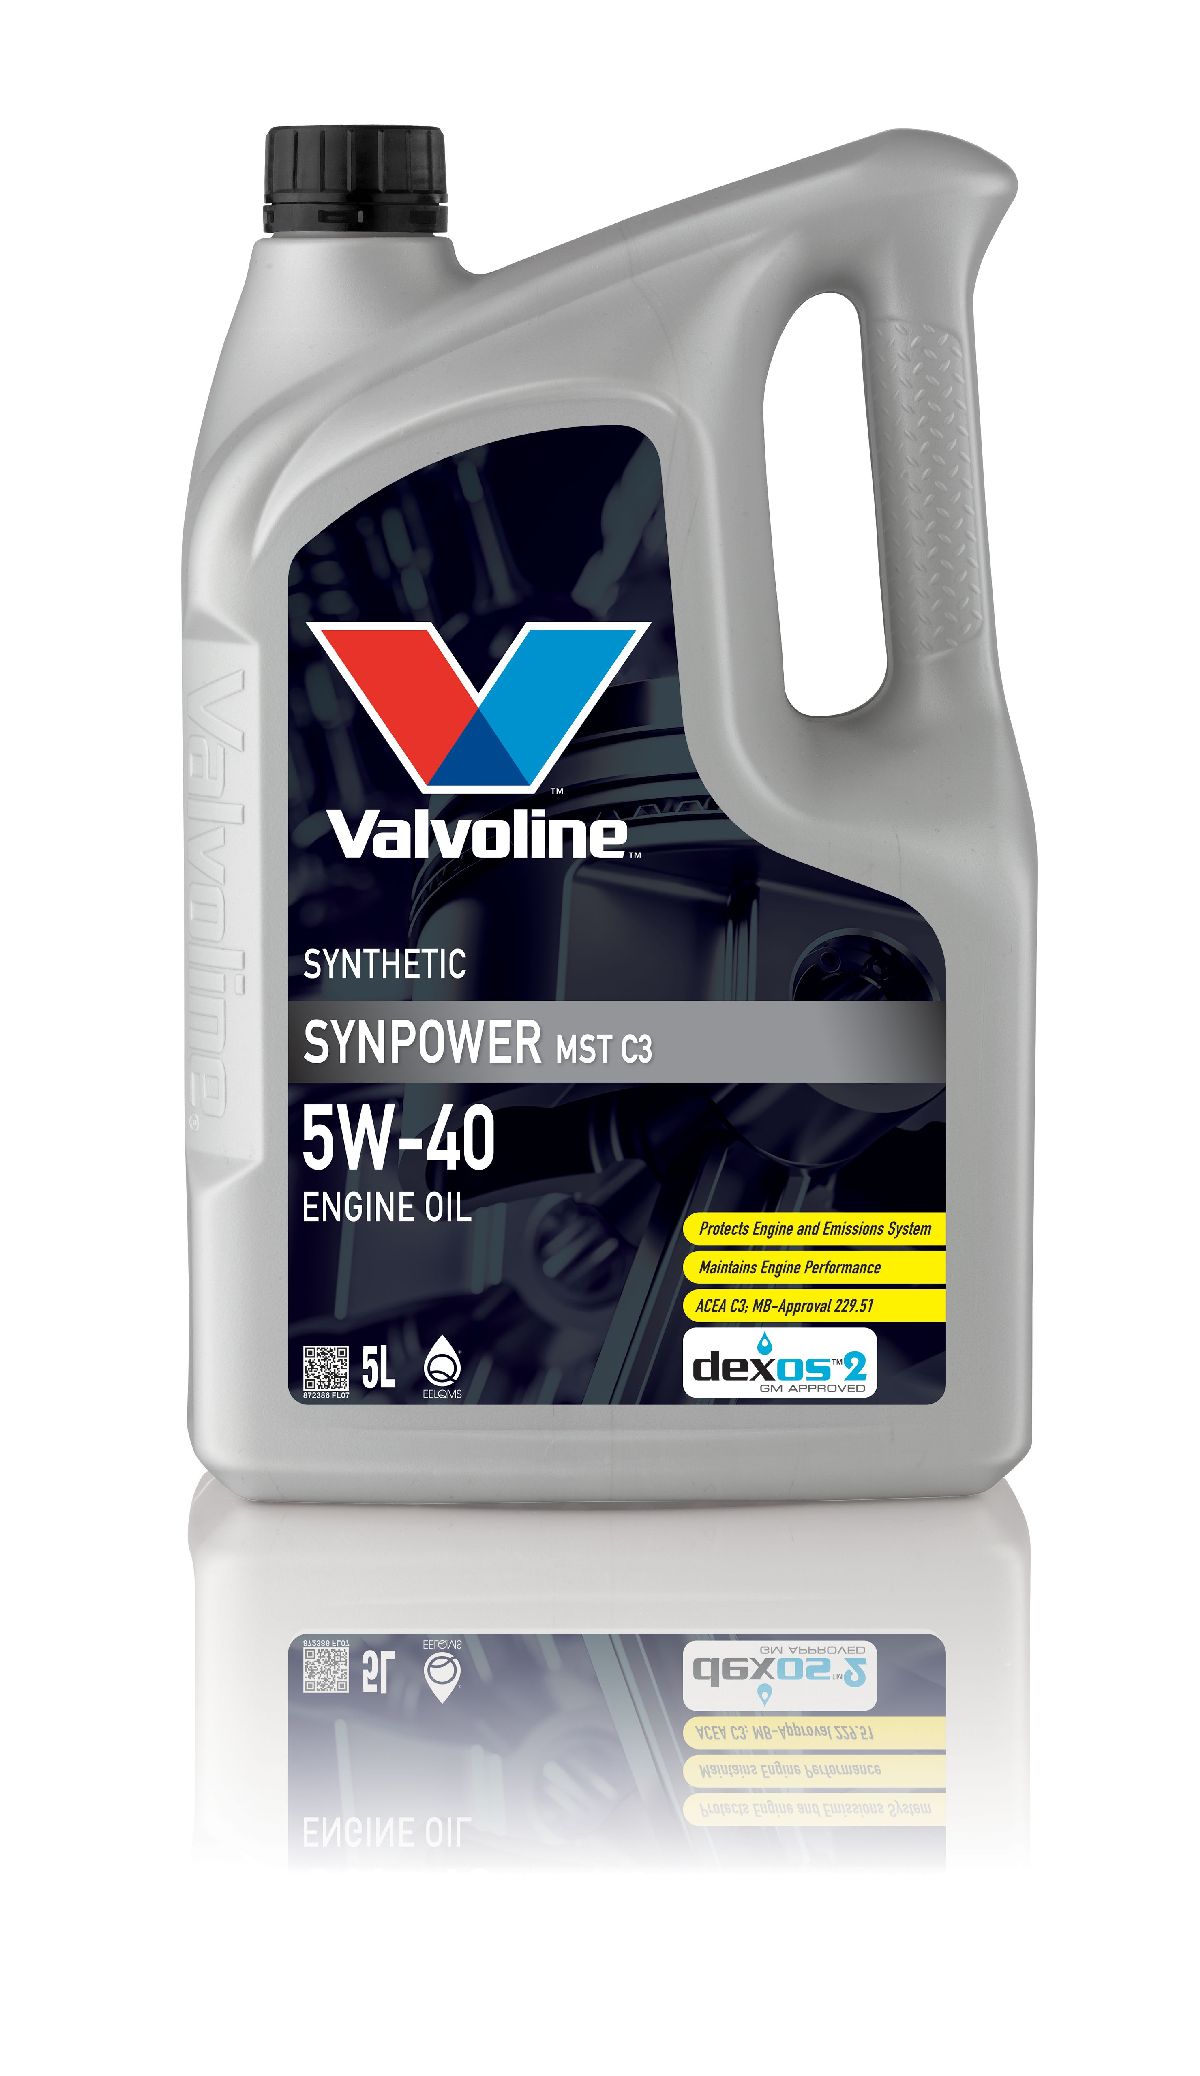 Valvoline Synpower MST C3 5W-40